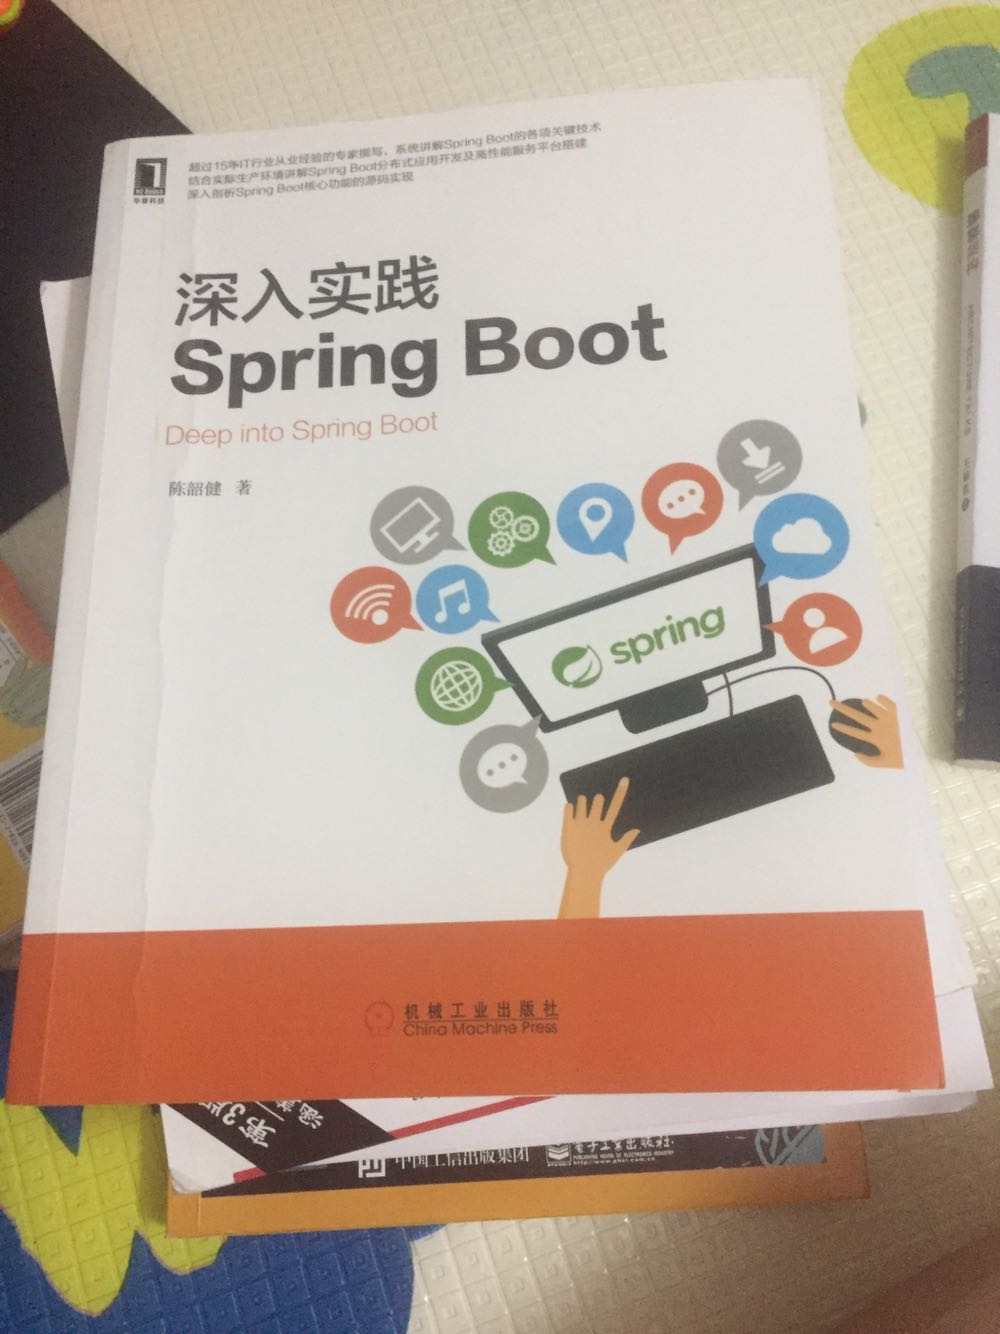 springboot目前很流行，集成的东西很多，翻看了这本书的目录，只讲了一部分内容，相关的中文书籍不多，先看看在追评